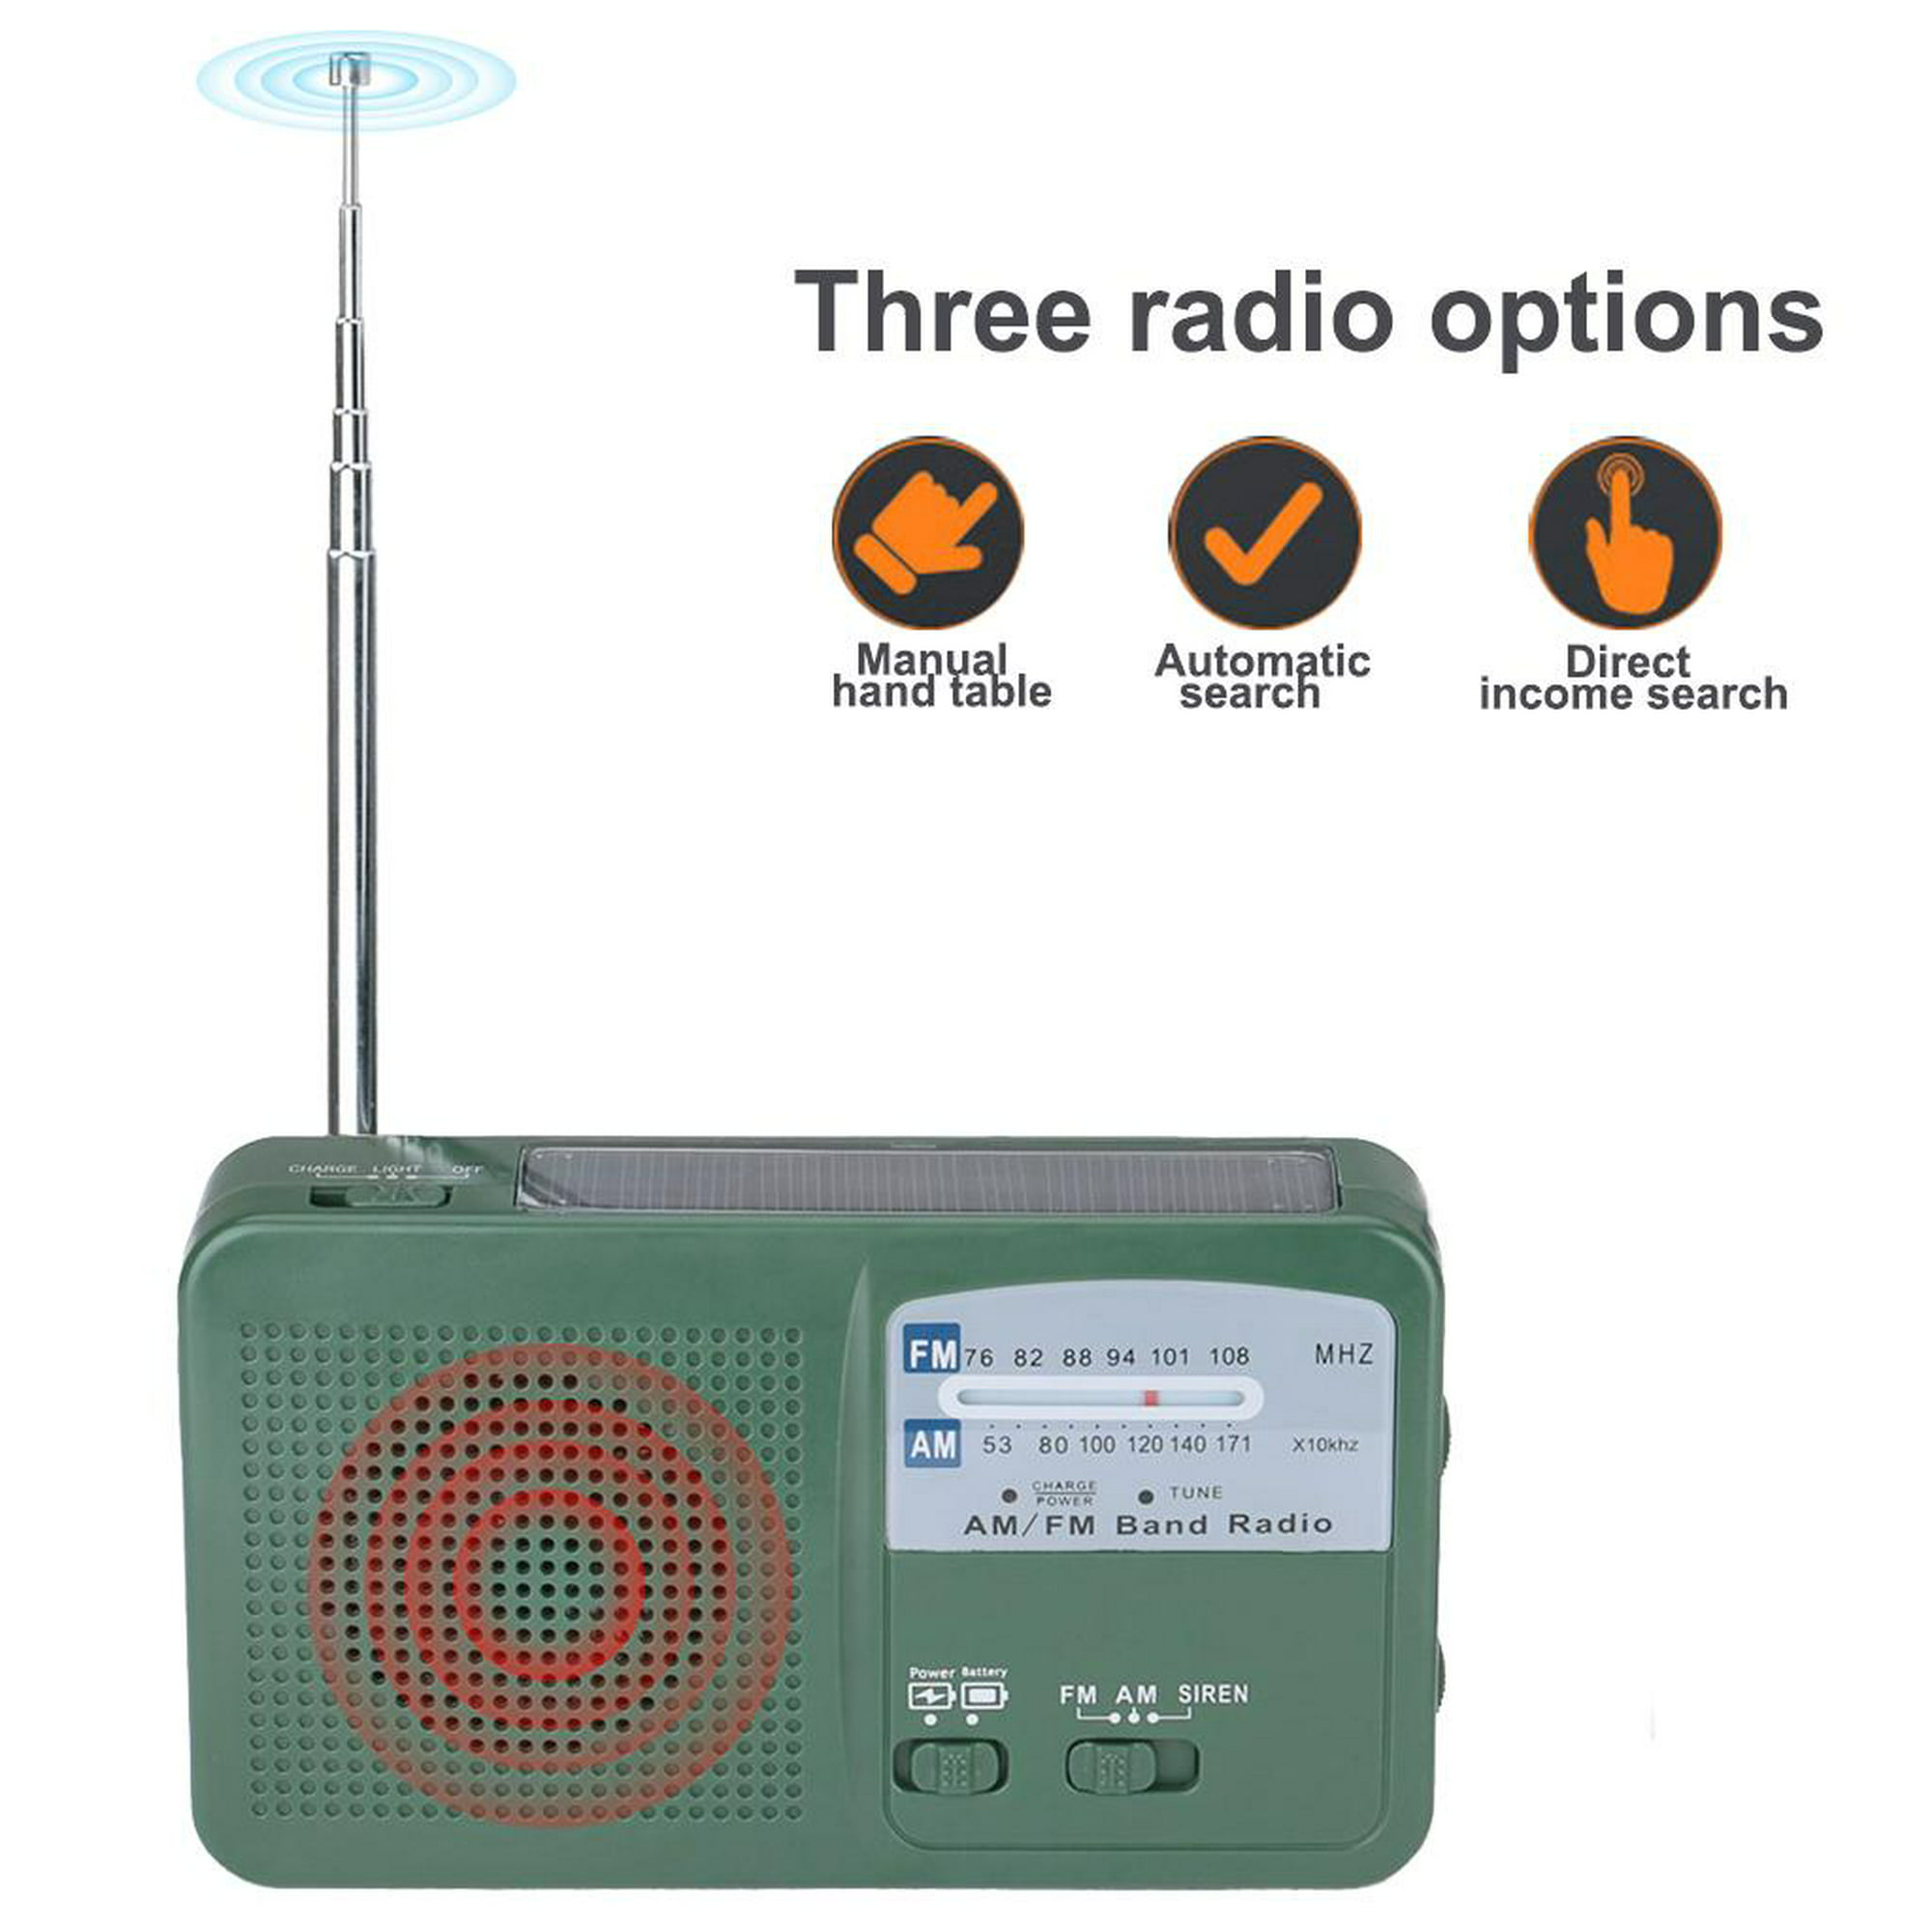 Radio Solar Bluetooth Linterna , Usb, Radio, Carga Automatic